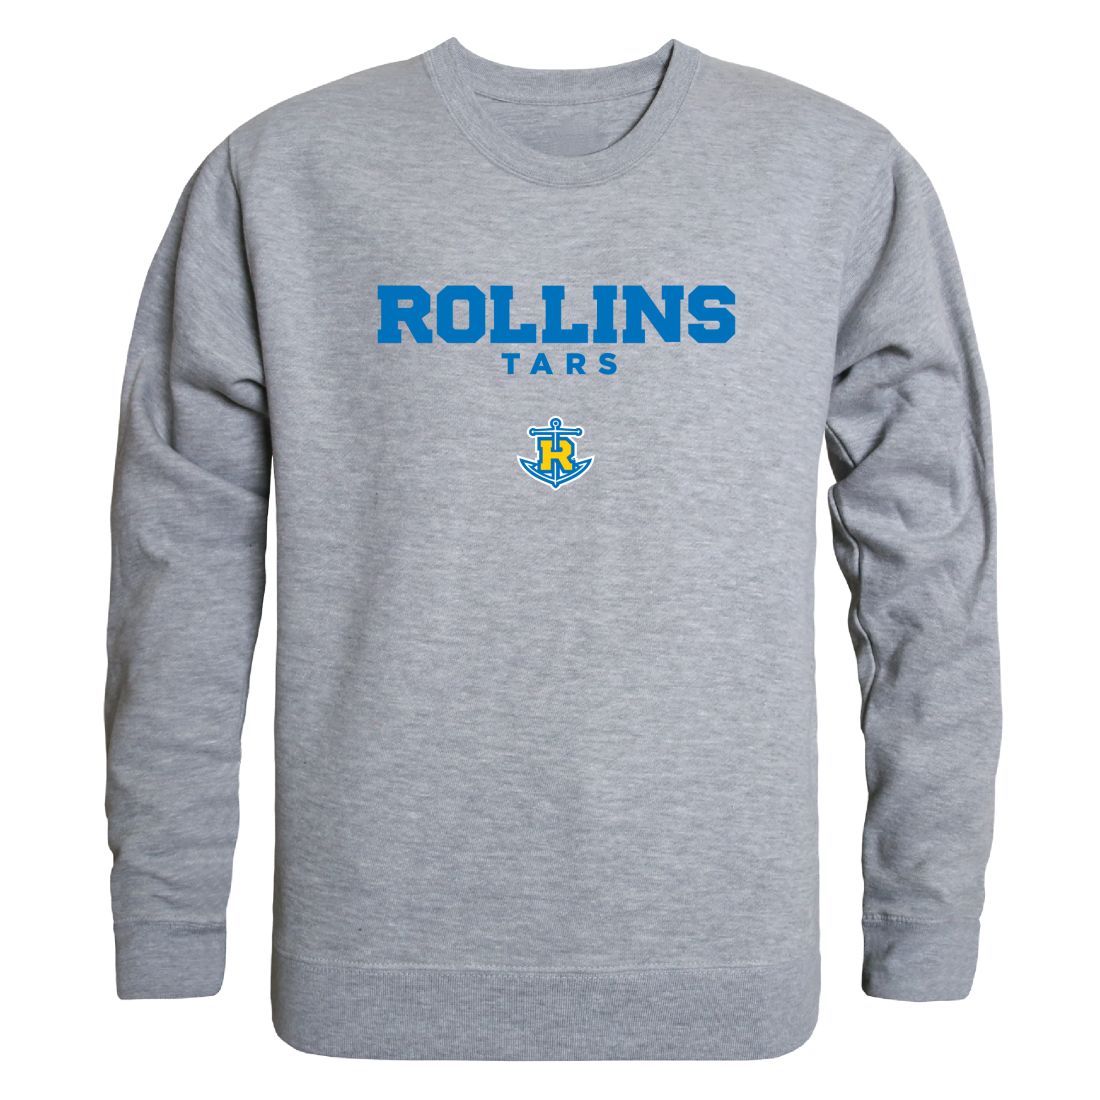 Rollins College Tars Campus Crewneck Sweatshirt